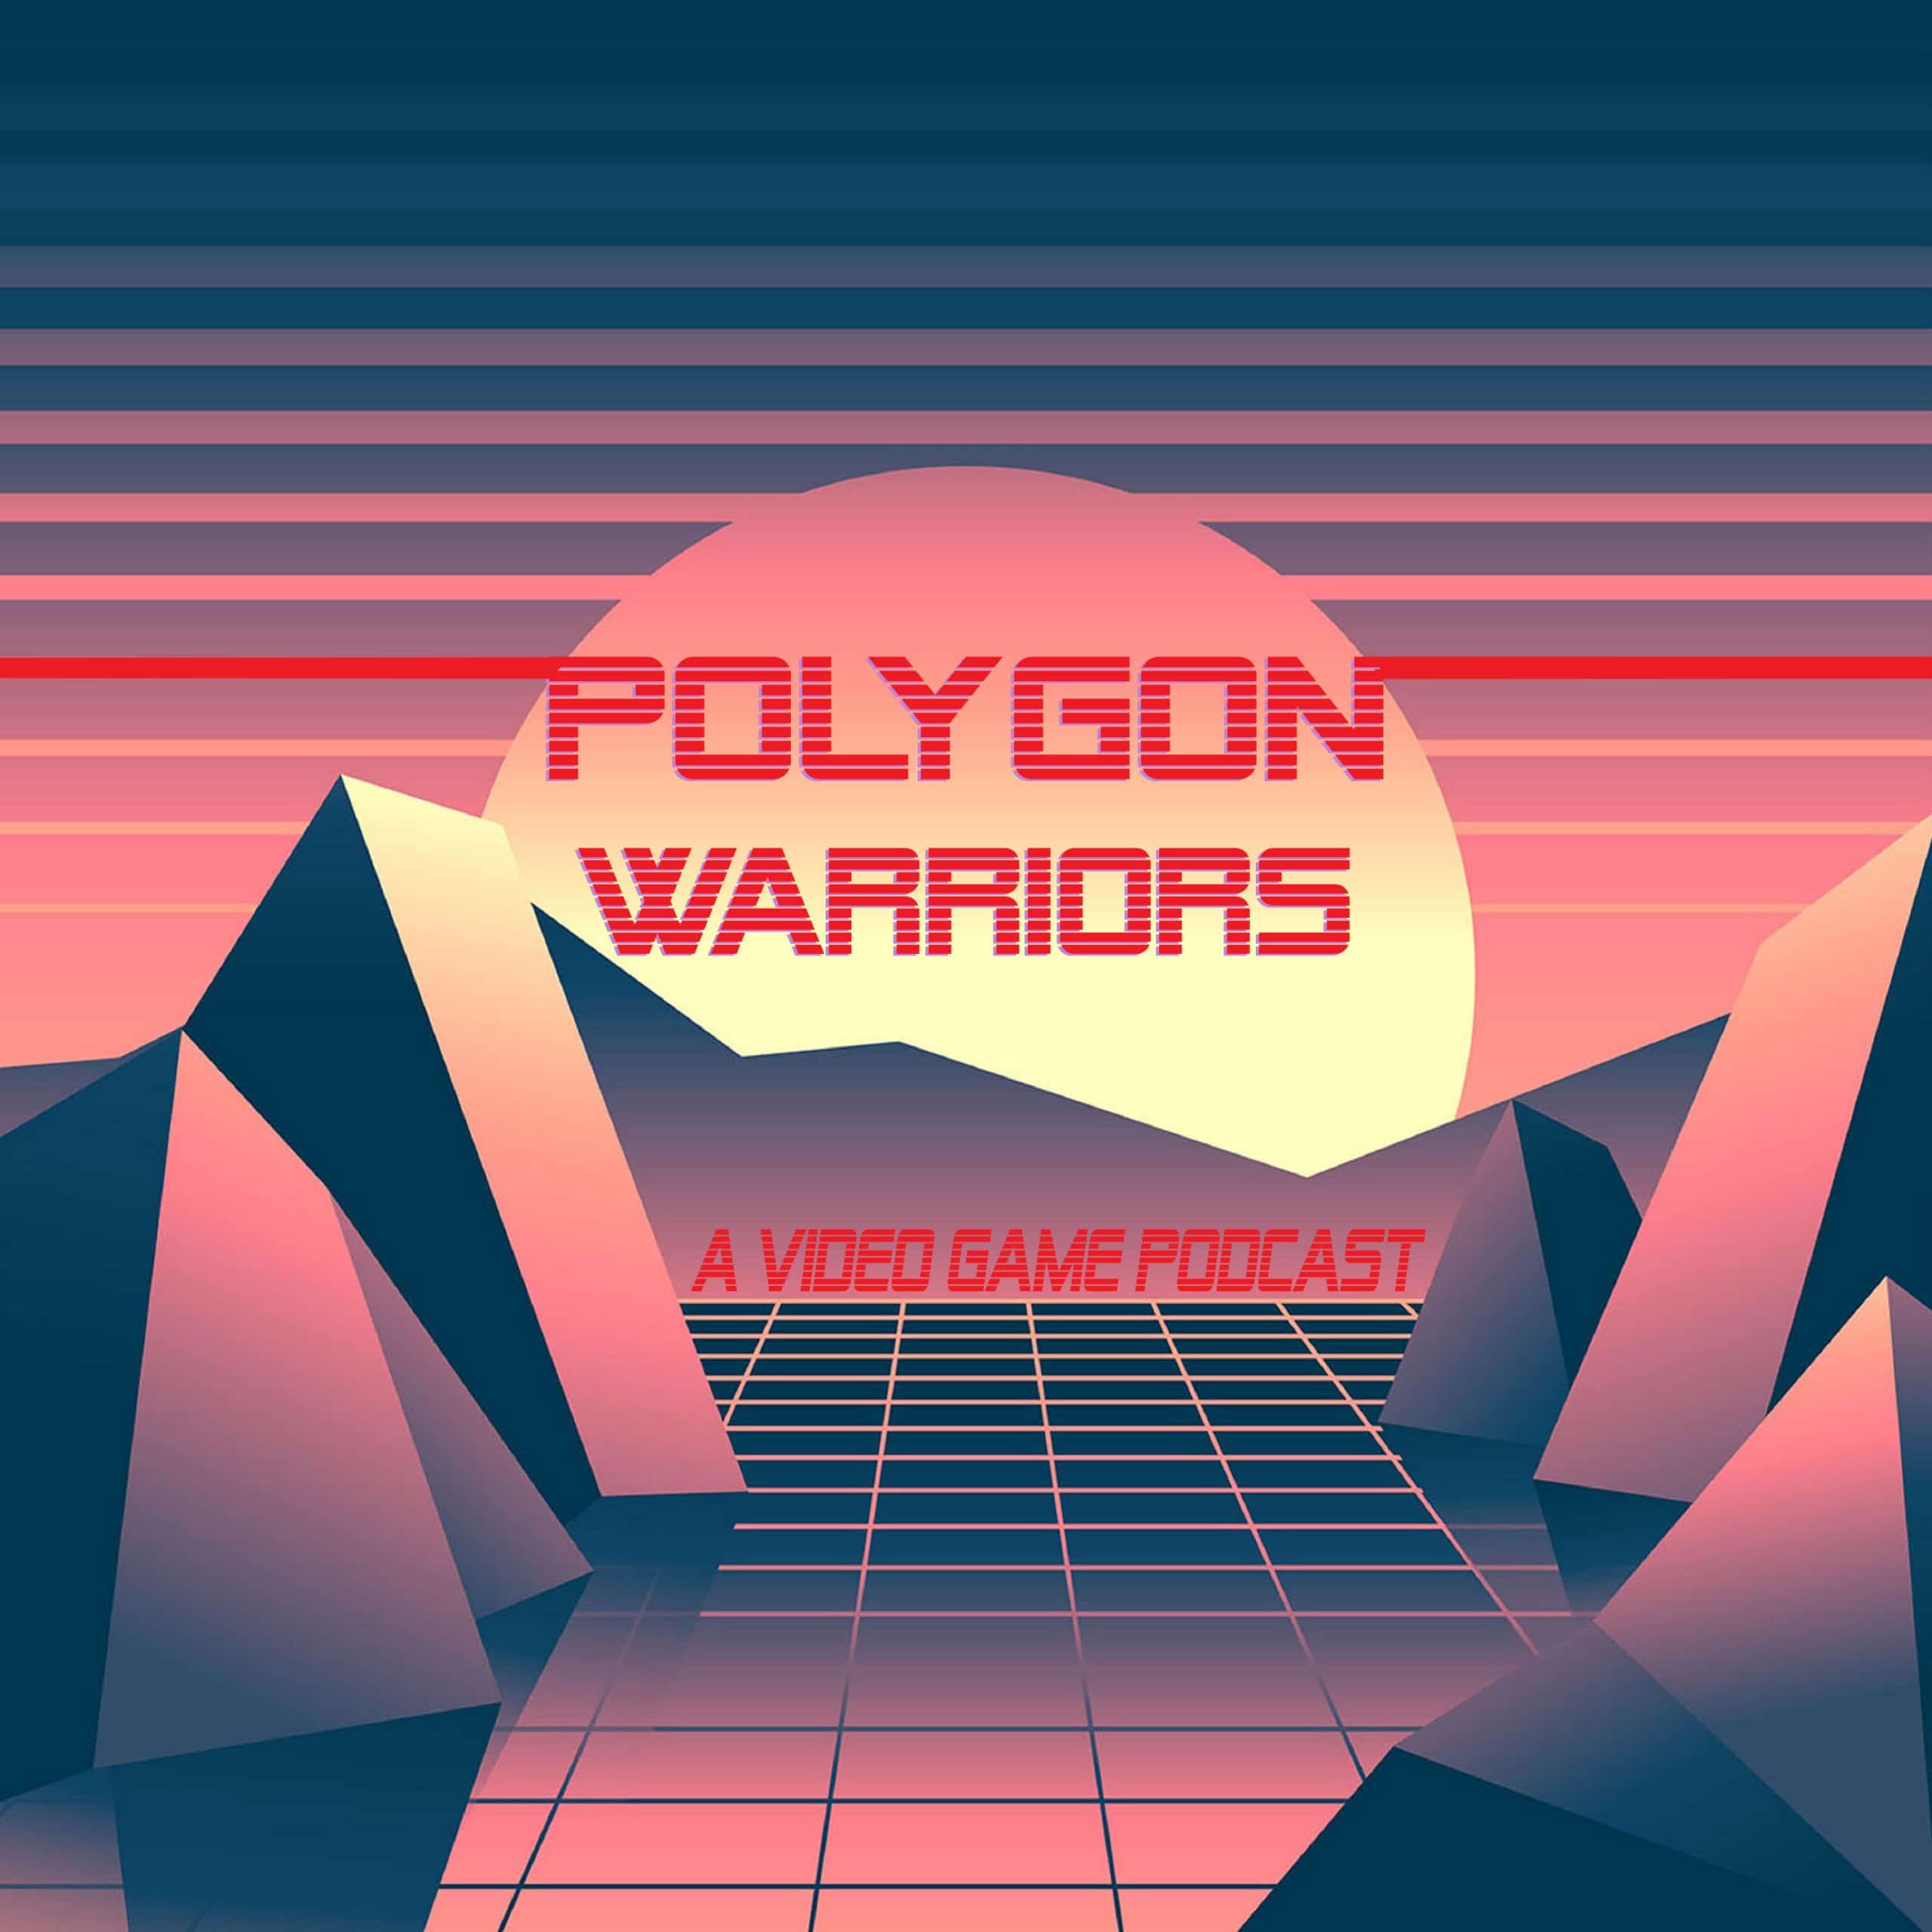 Polygon Warriors